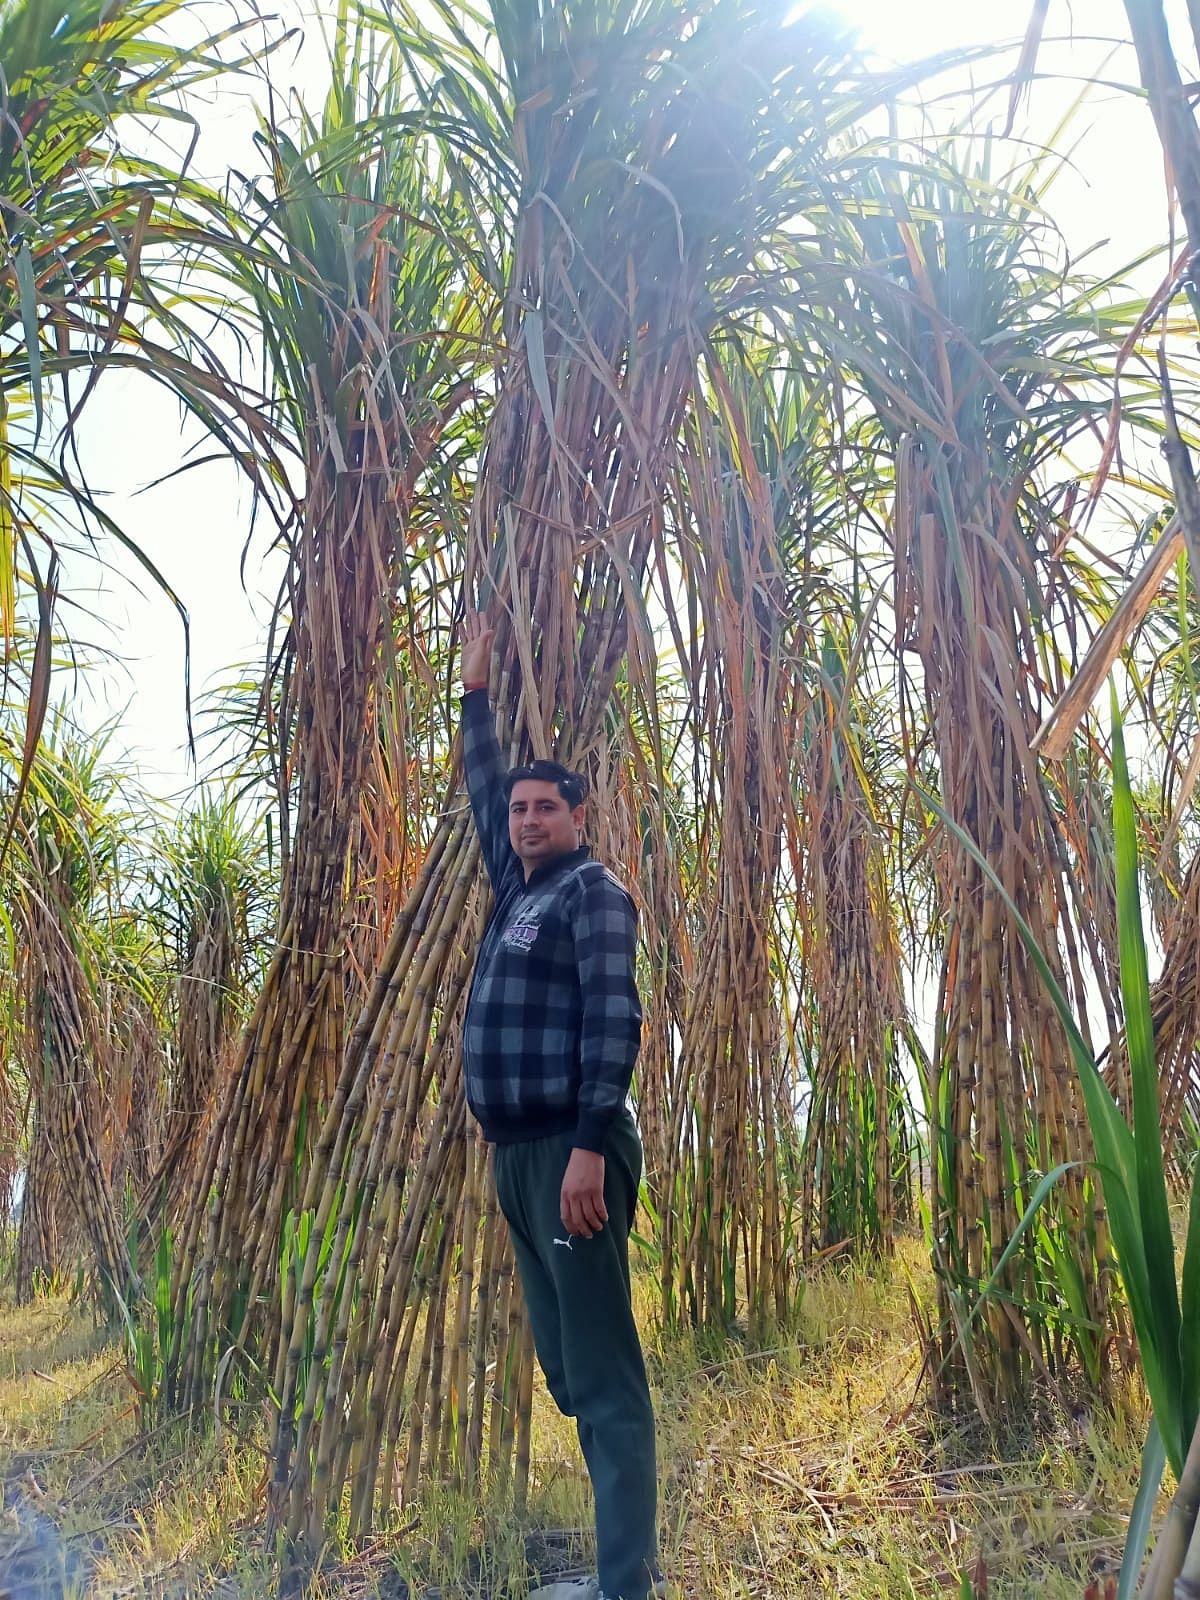 Meet the farmer who earns Rs 50-60 lakh from sugarcane, has 7 lakh  followers on social media